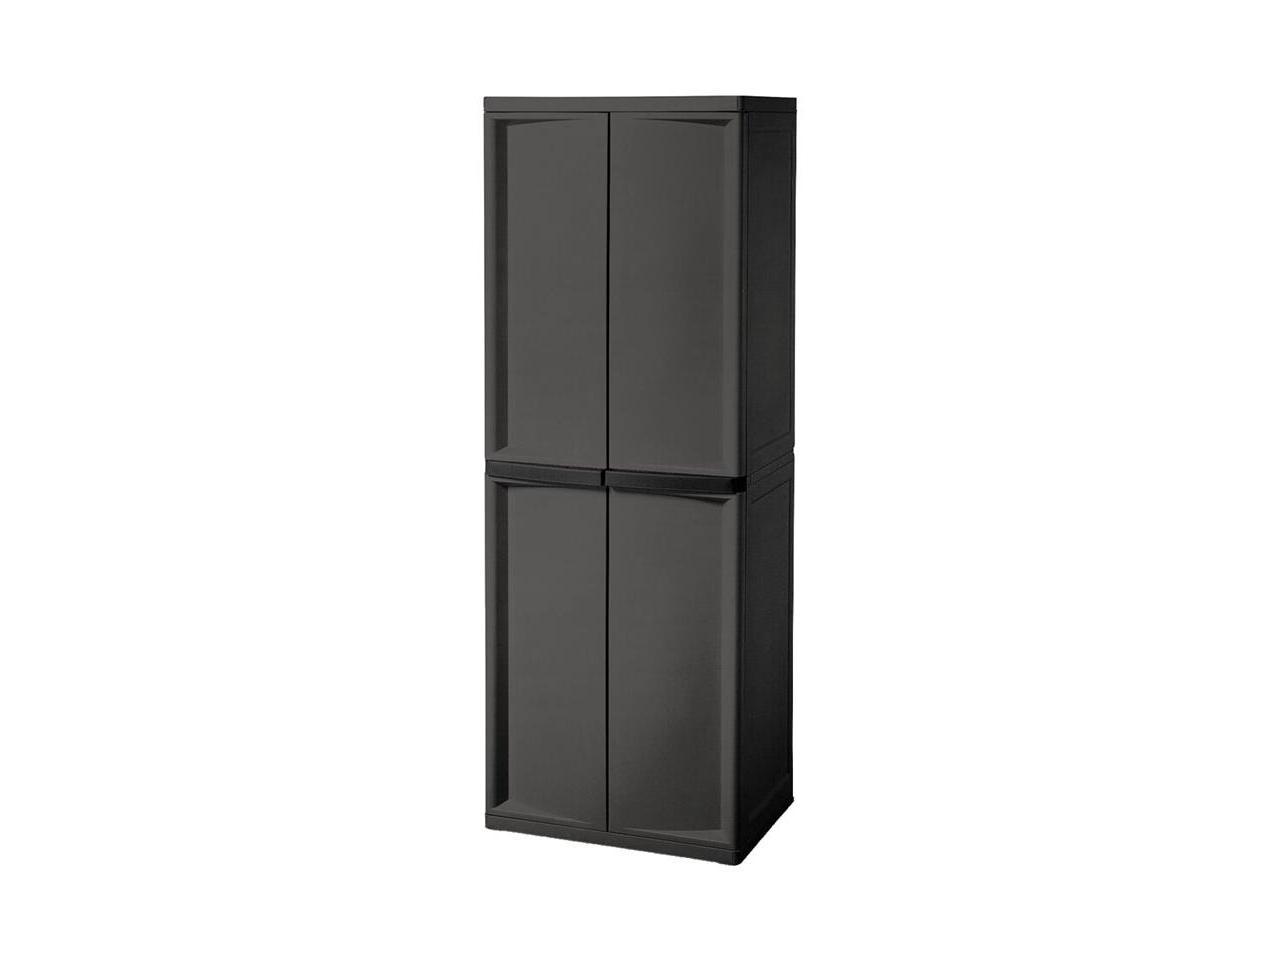 Sterilite Adjustable 4 Shelf Storage, Sterilite Storage Cabinets With Doors And Shelves